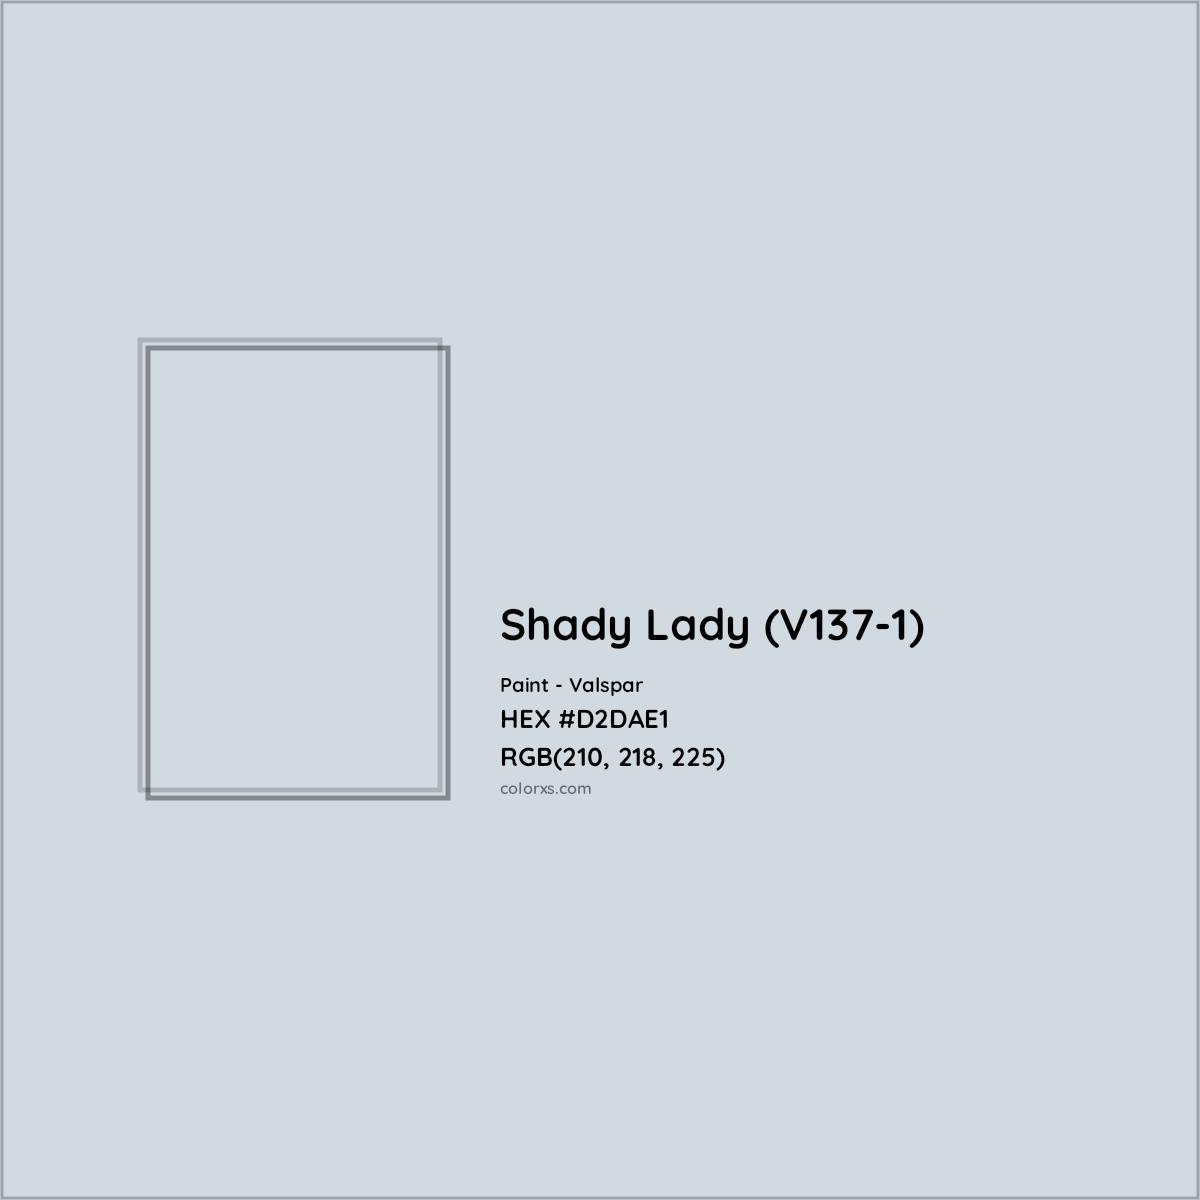 HEX #D2DAE1 Shady Lady (V137-1) Paint Valspar - Color Code